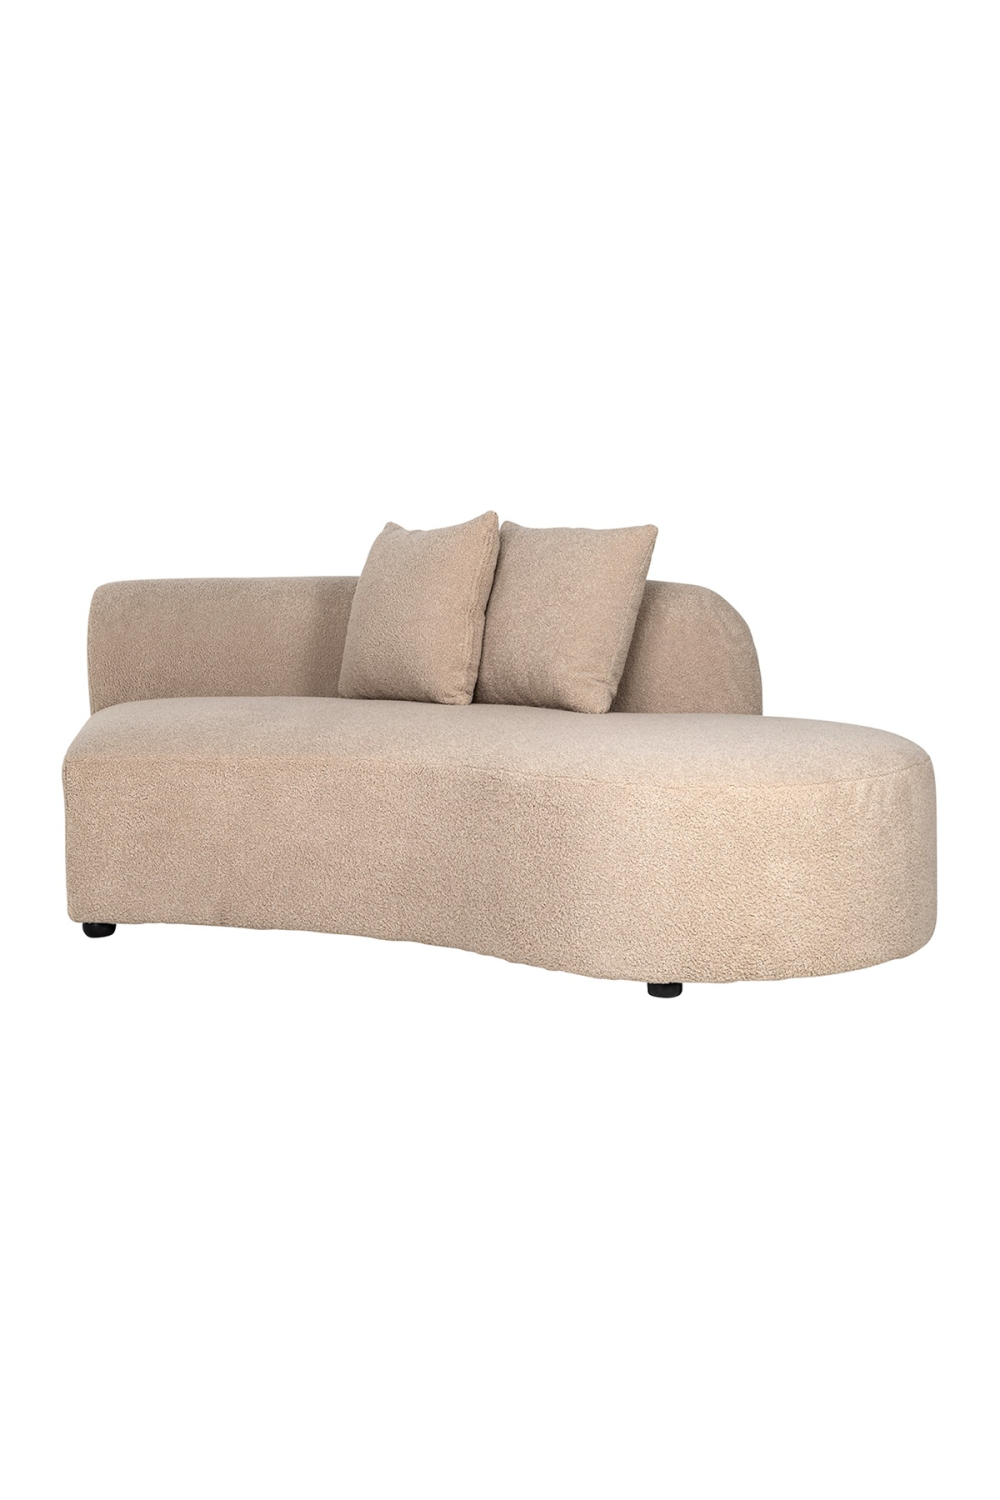 Contemporary Curved Modular Sofa OROA Grayson LEFT SIDE OROA - OROA